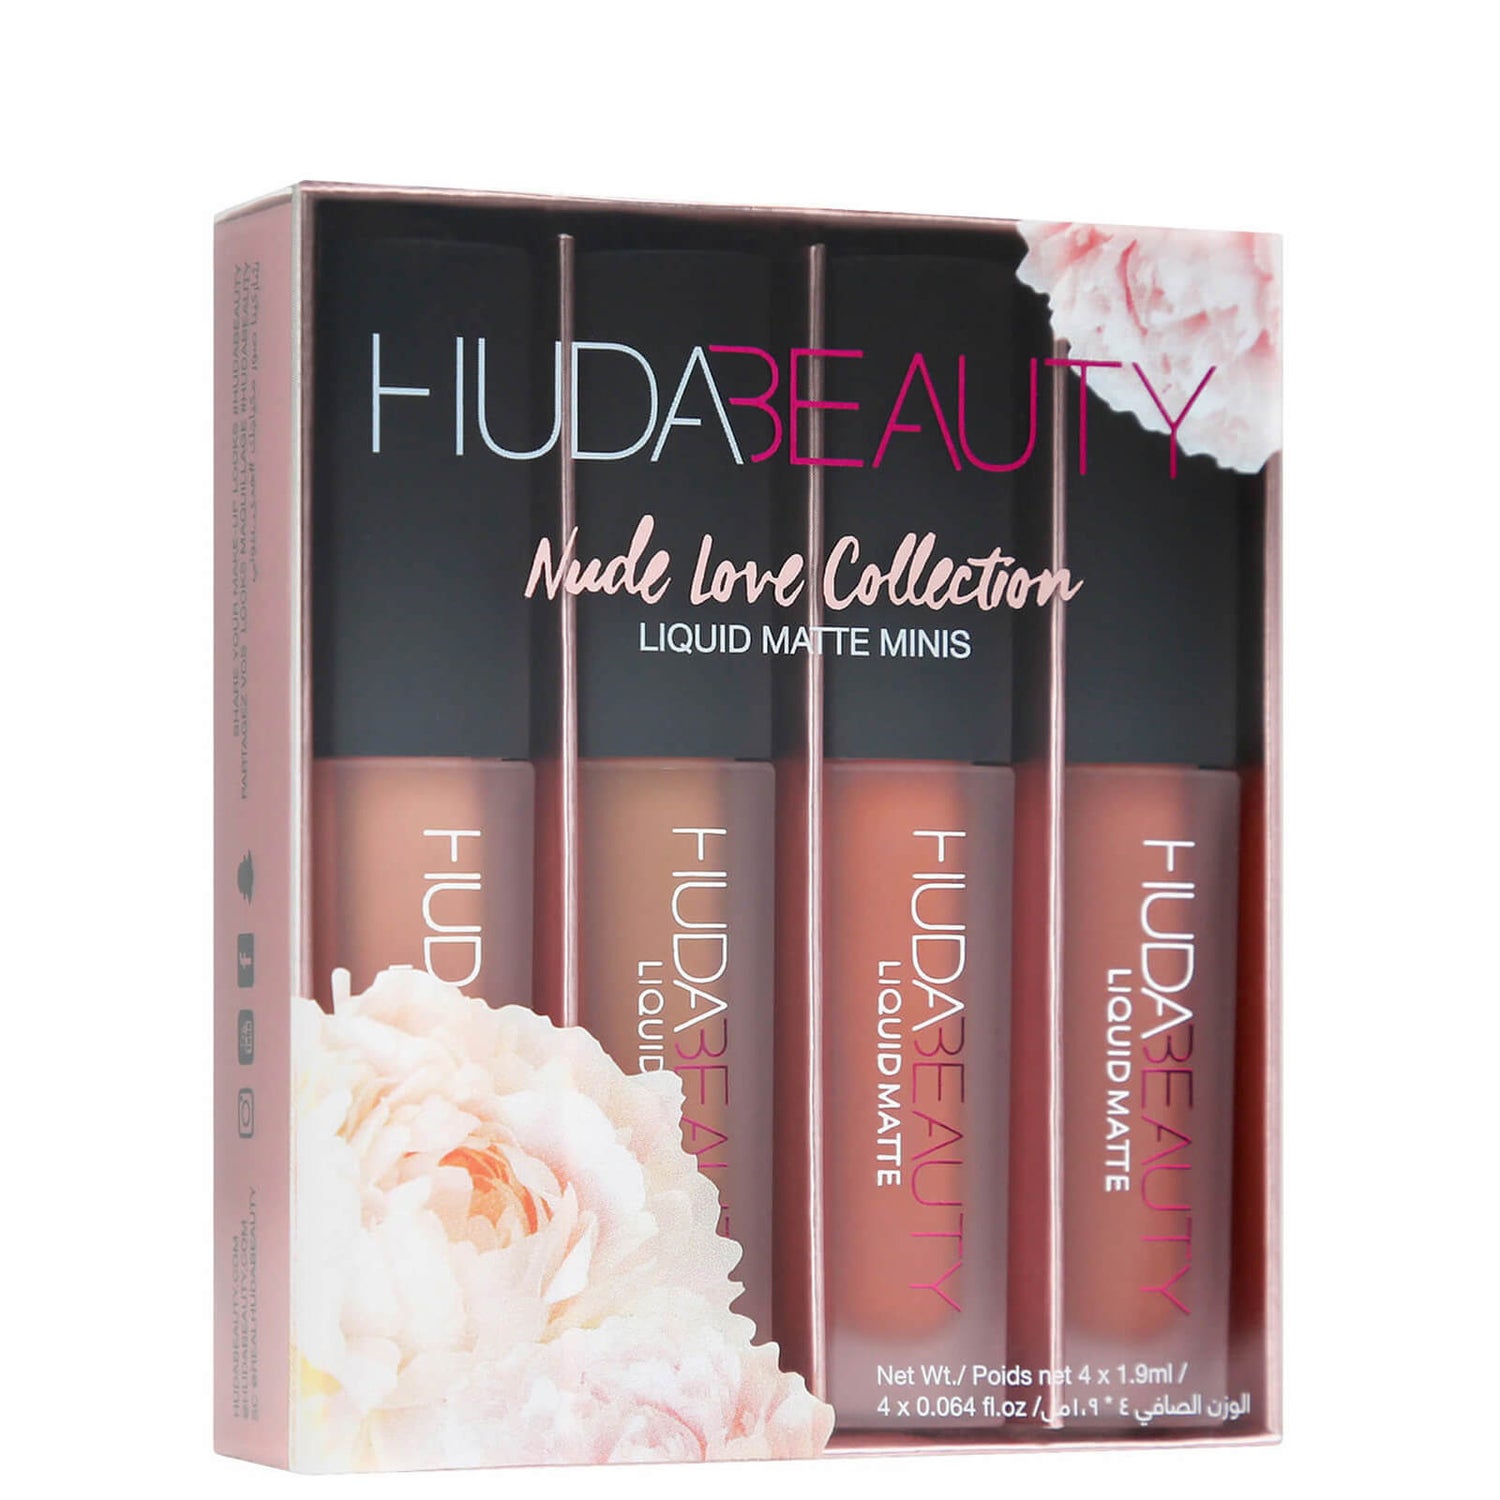 Huda Beauty Liquid Matte Minis - Nude Love Collection | Cult Beauty